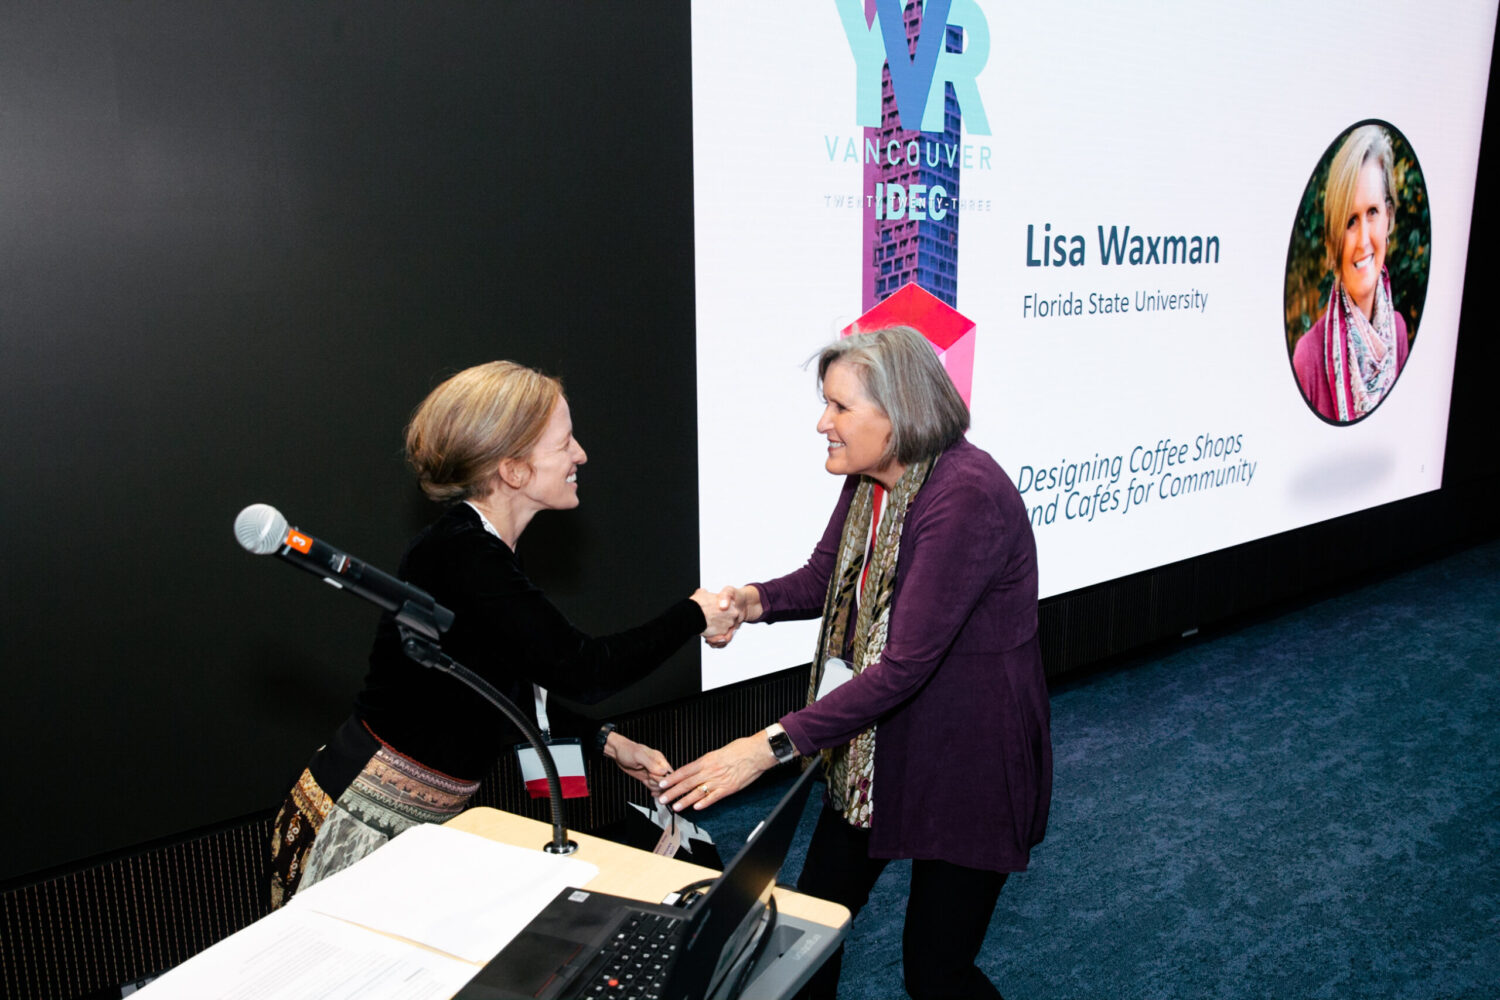 Lisa Waxman receiving an award from Laura Cole.